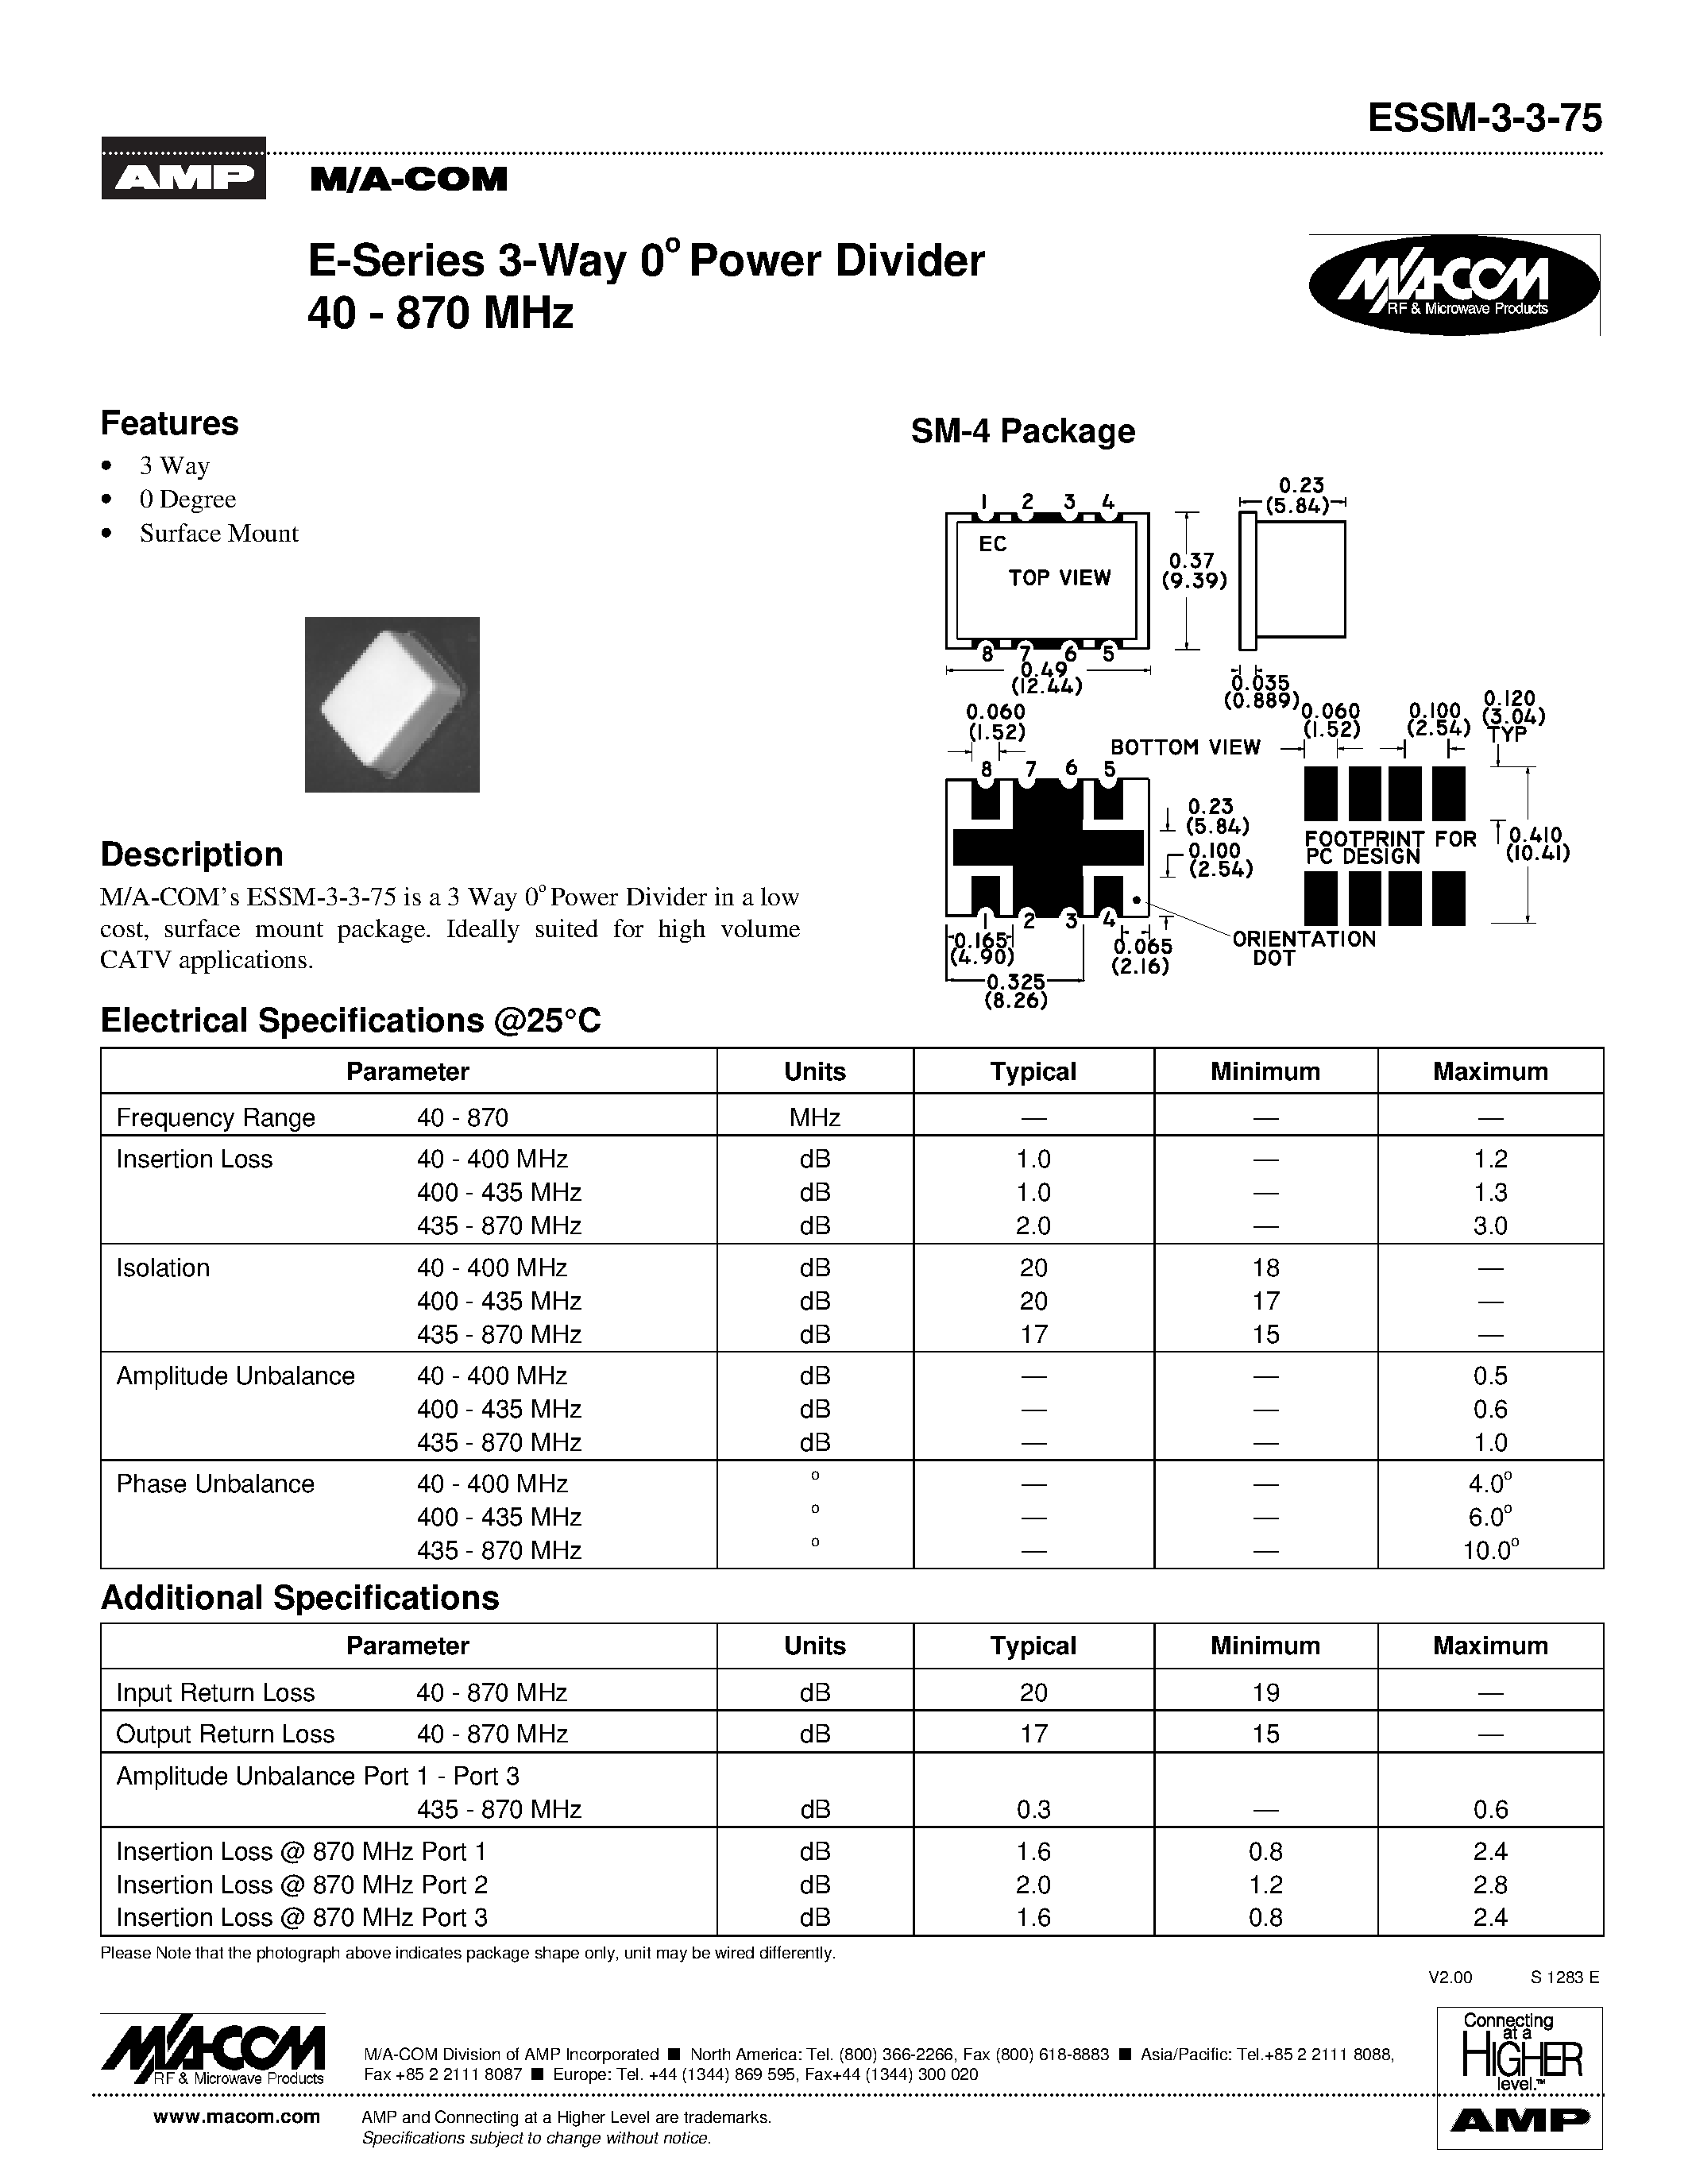 Даташит ESSM-3-3-75 - E-Series 3-Way 0 Power Divider 40 - 870 MHz страница 1